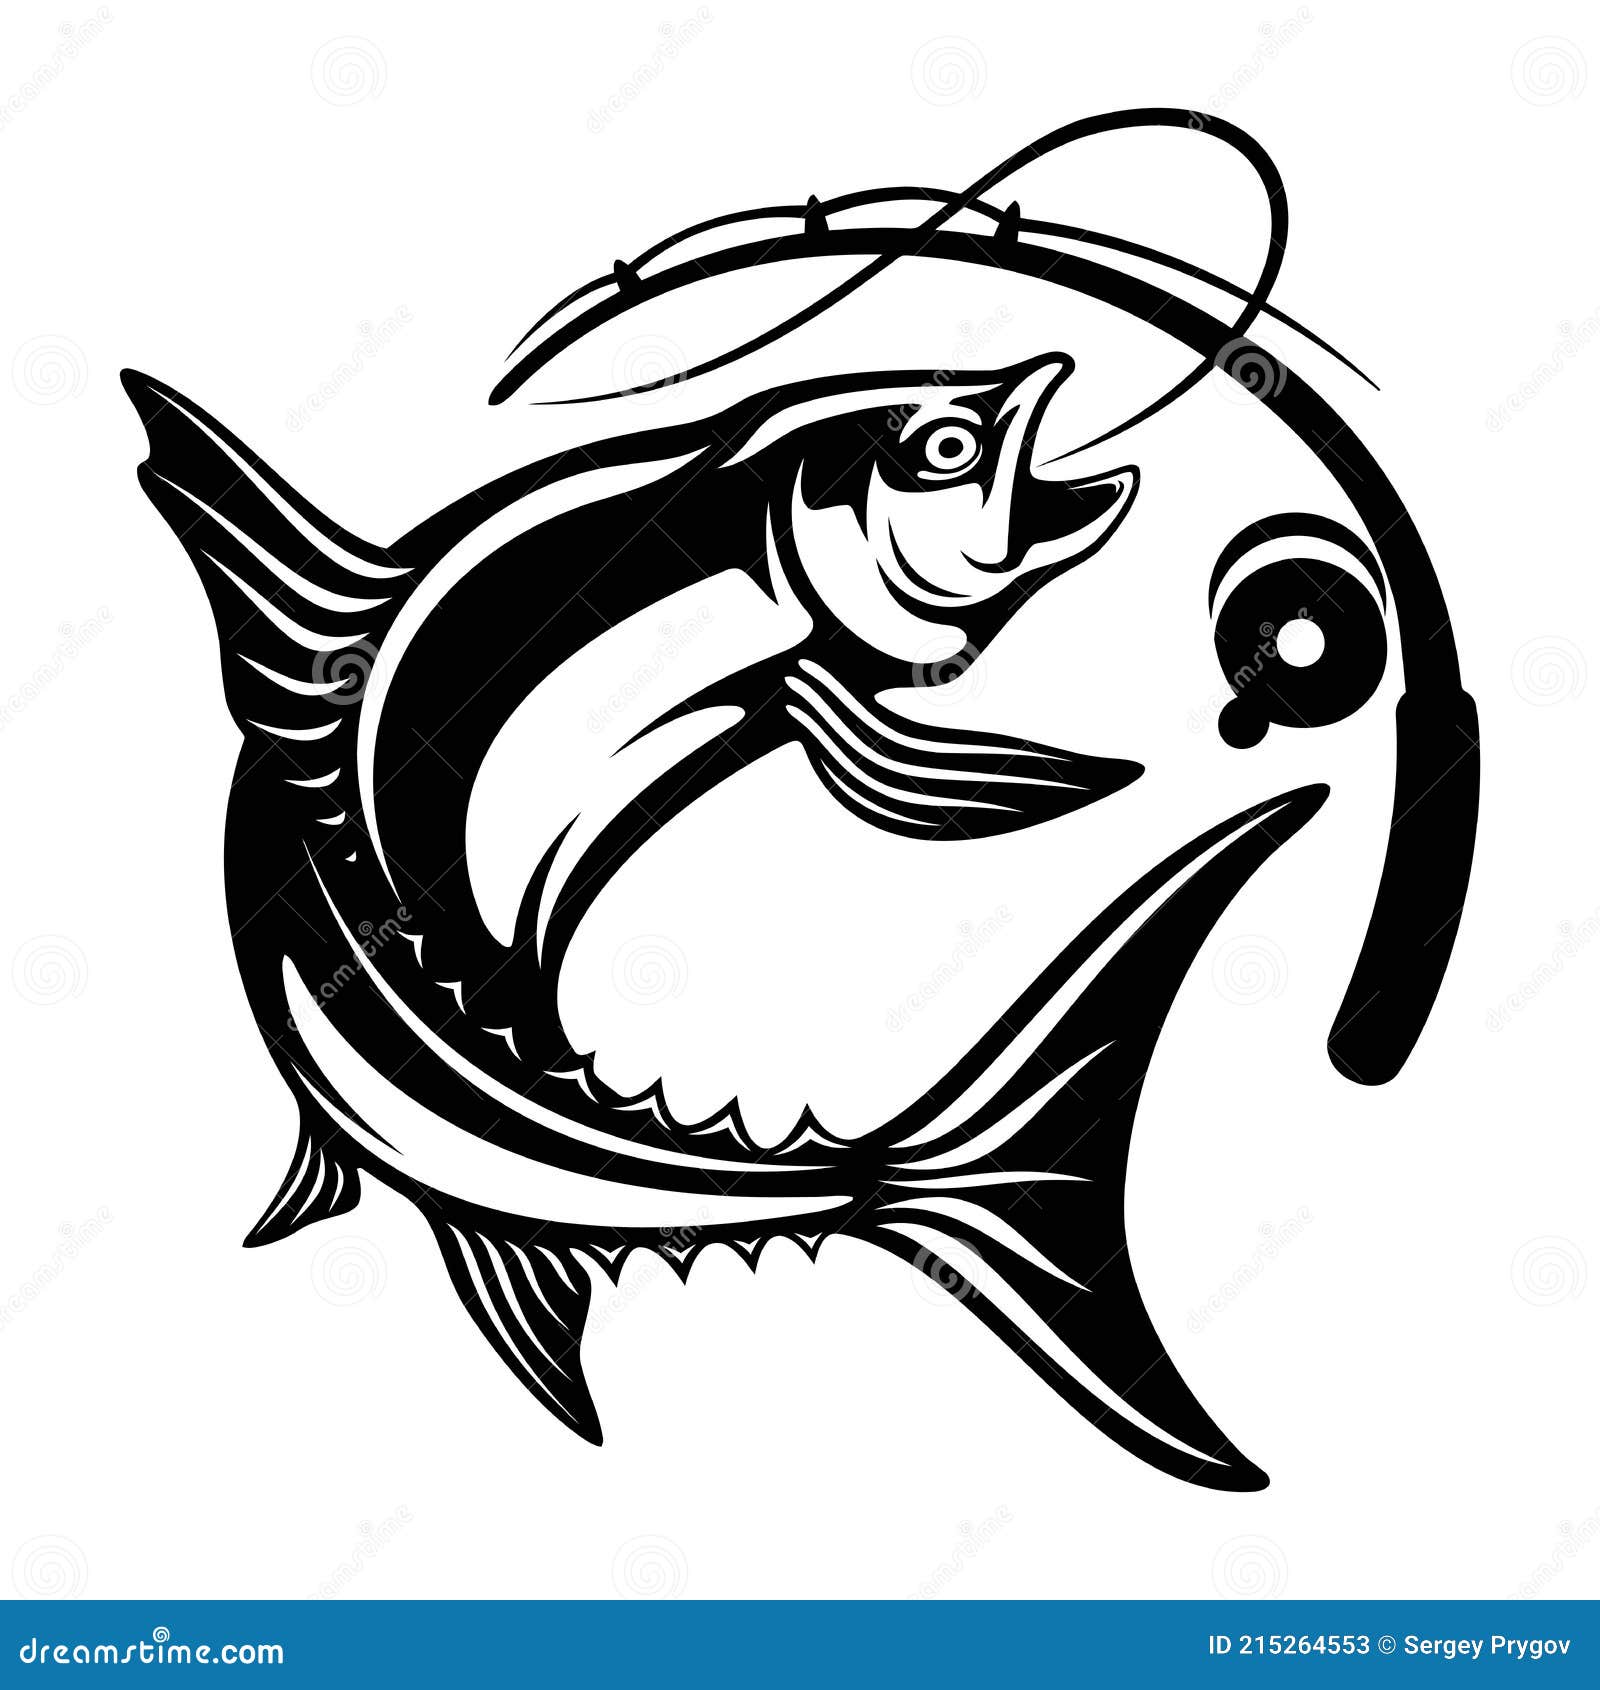 https://thumbs.dreamstime.com/z/salmon-fish-fishing-rod-fishing-logo-template-club-emblem-fishing-theme-vector-illustration-salmon-fish-fishing-rod-215264553.jpg